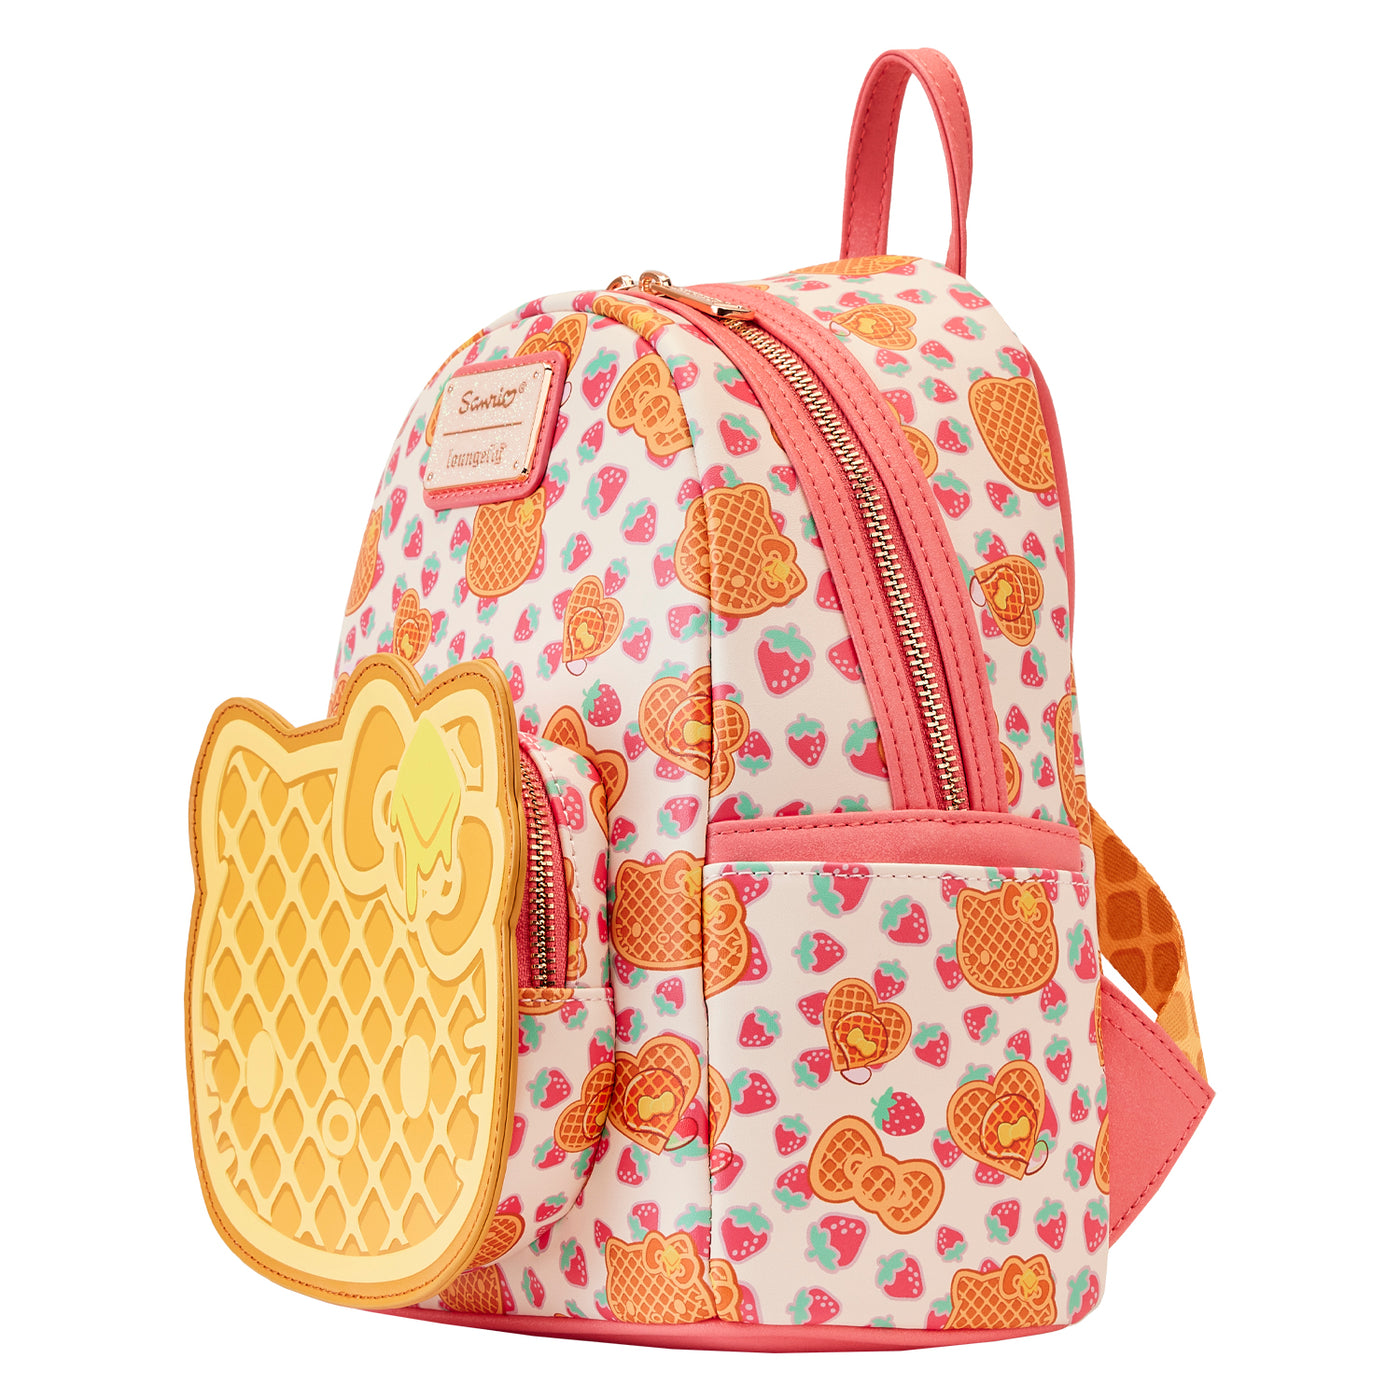 Sanrio Hello Kitty Breakfast Waffle Scented Mini Backpack